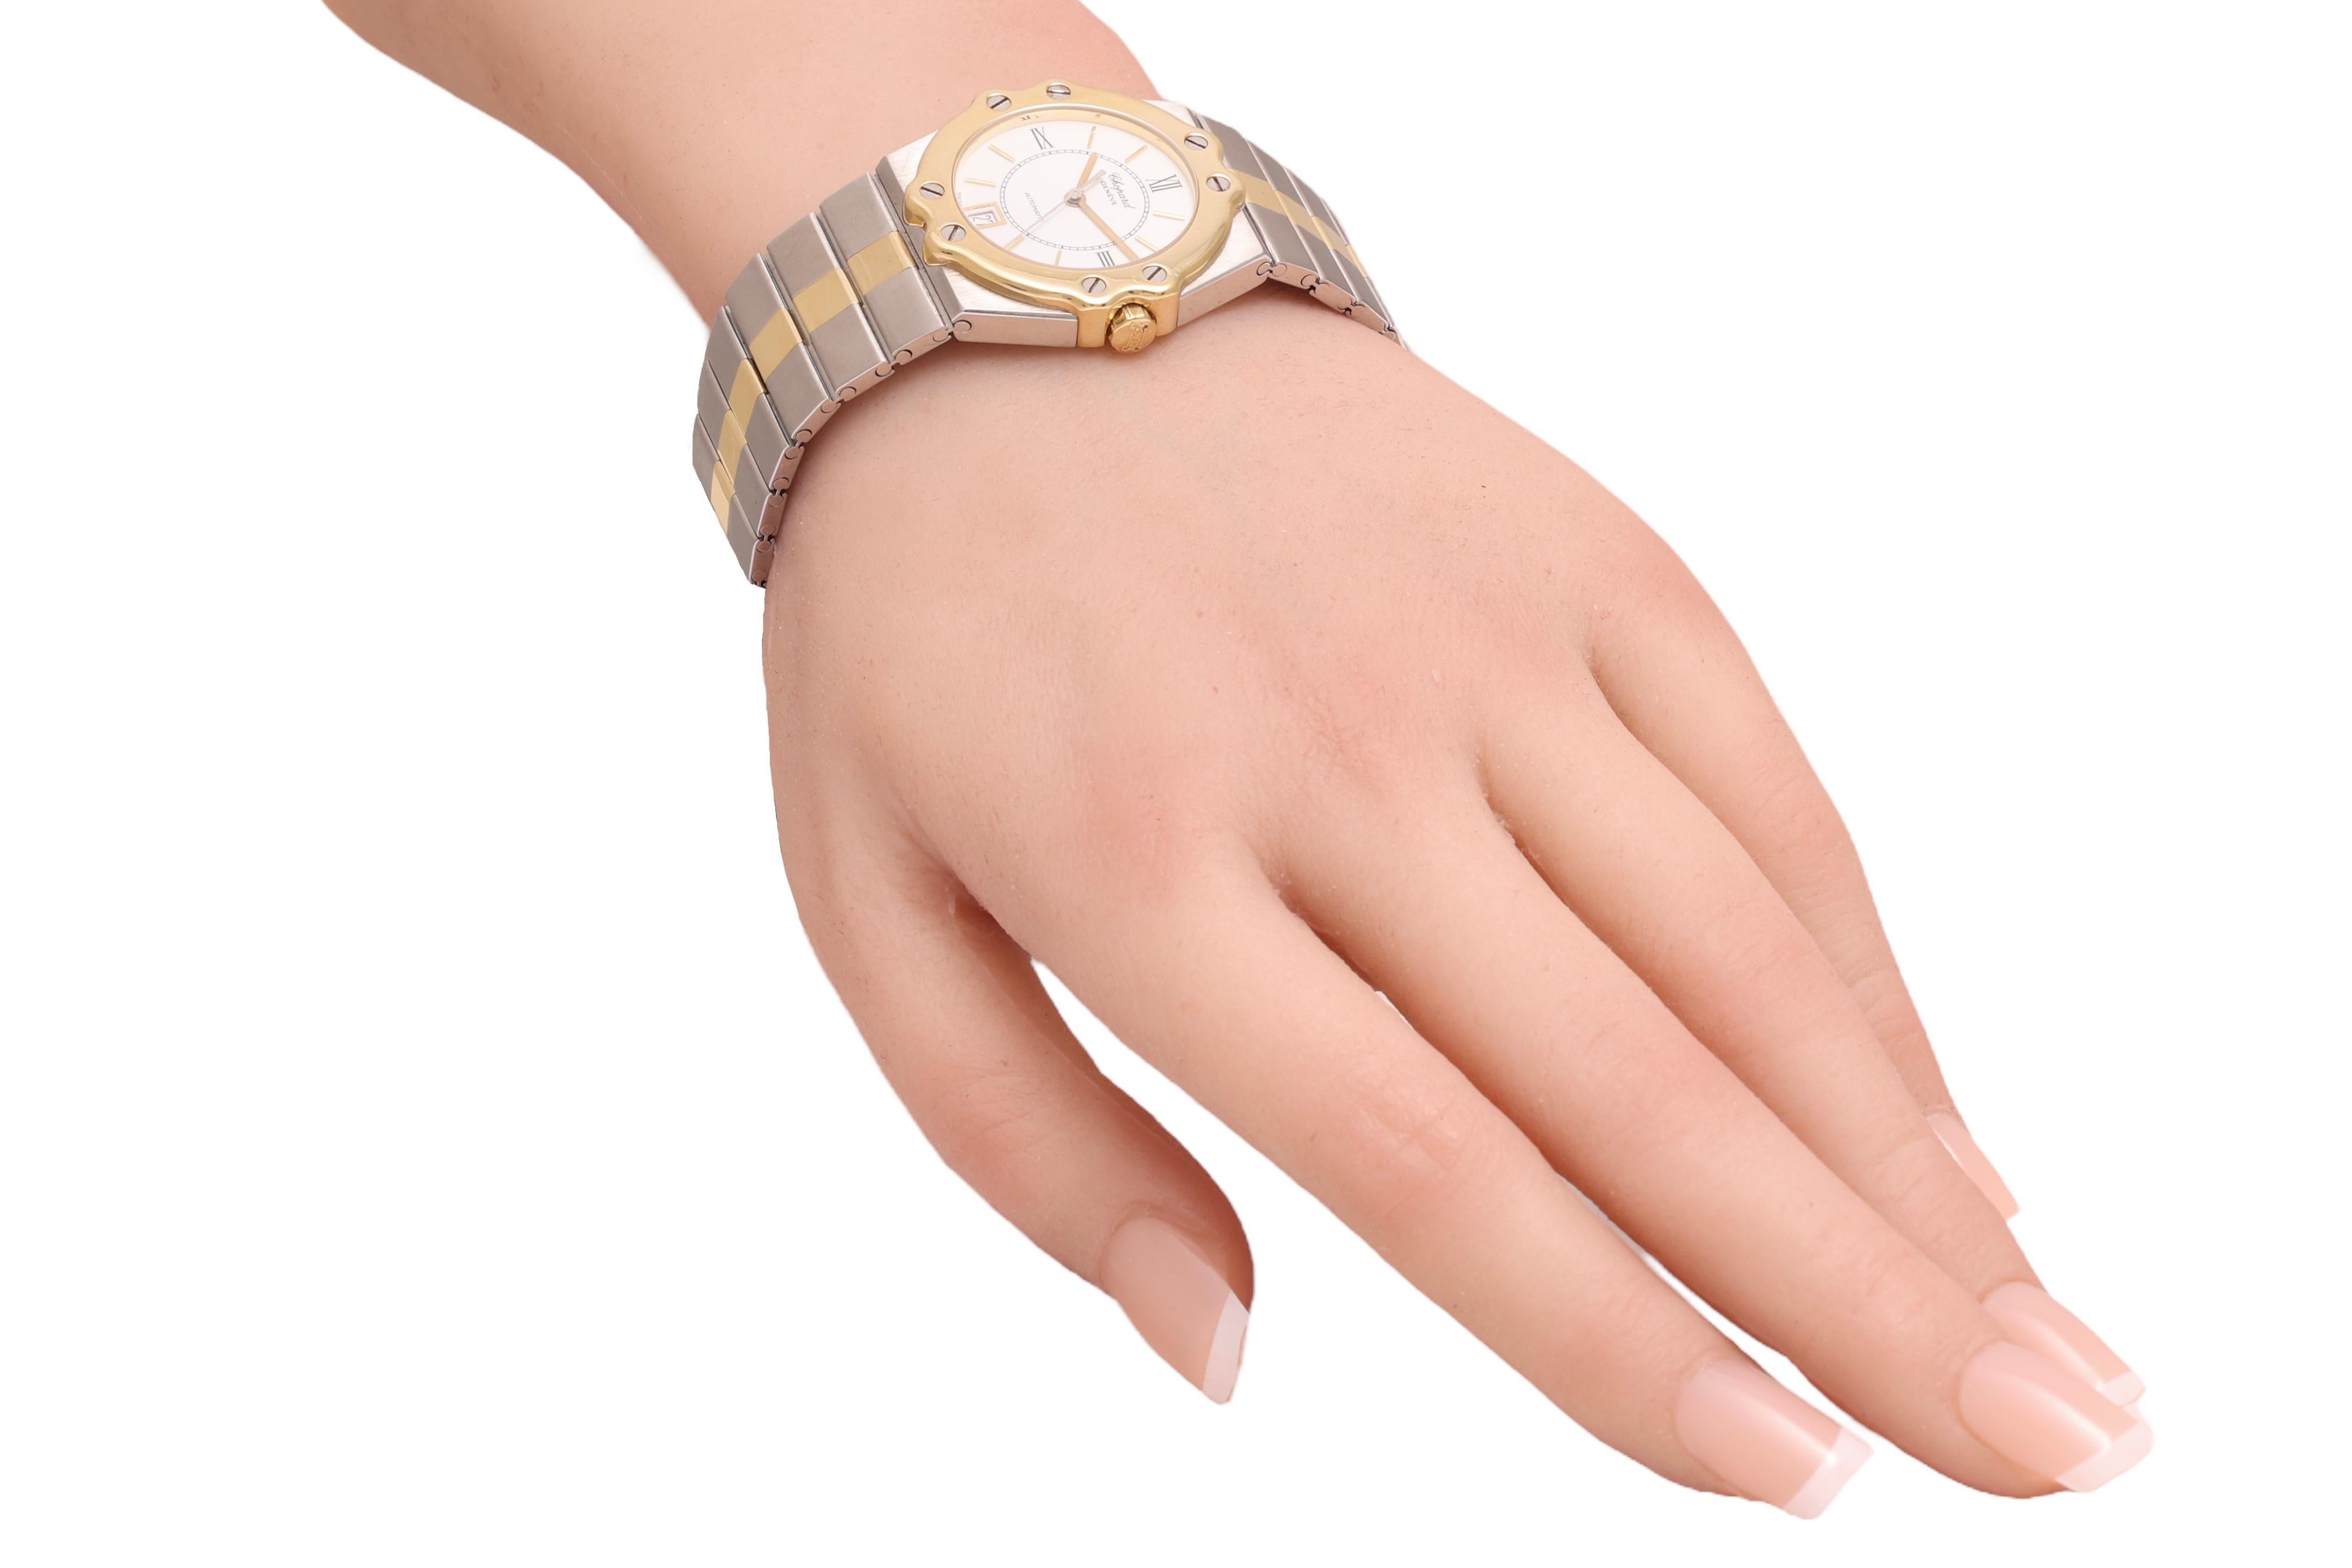 Gold & Steel Chopard St Moritz Automatic Wrist Watch For Sale 5